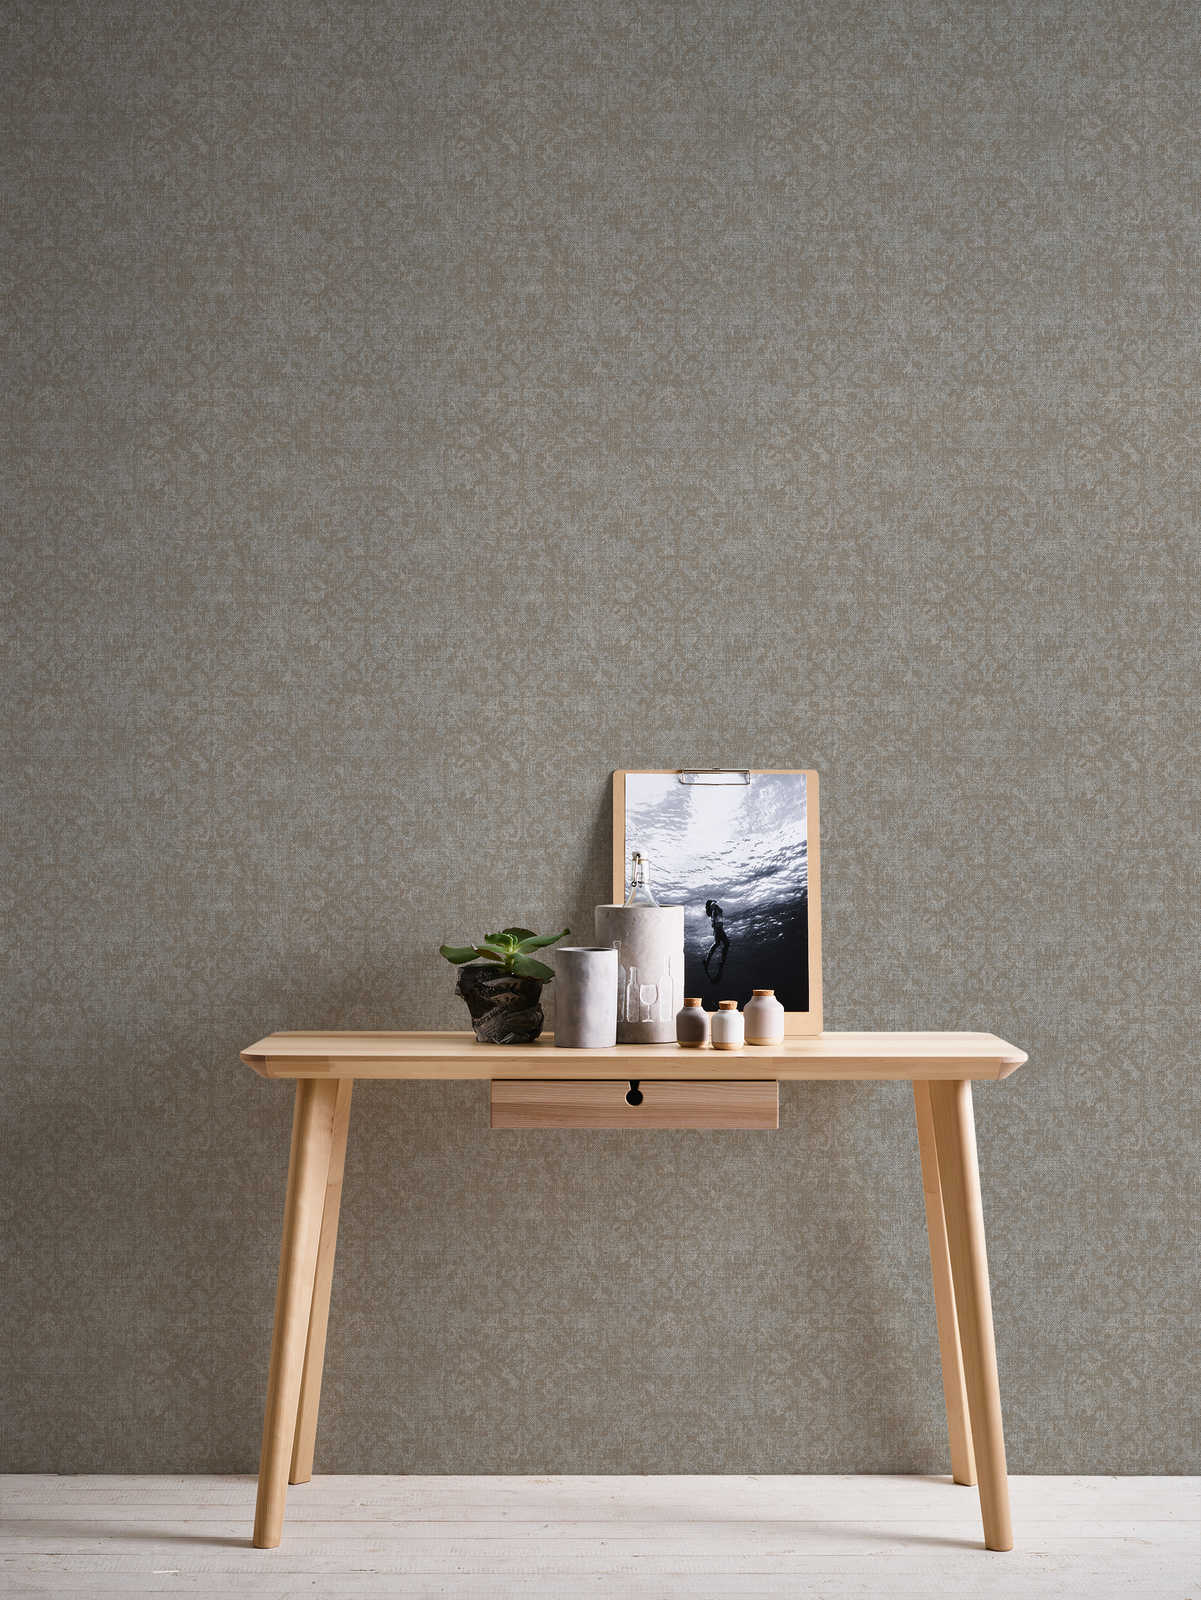             Ethno wallpaper grey-brown with brocade textile look
        